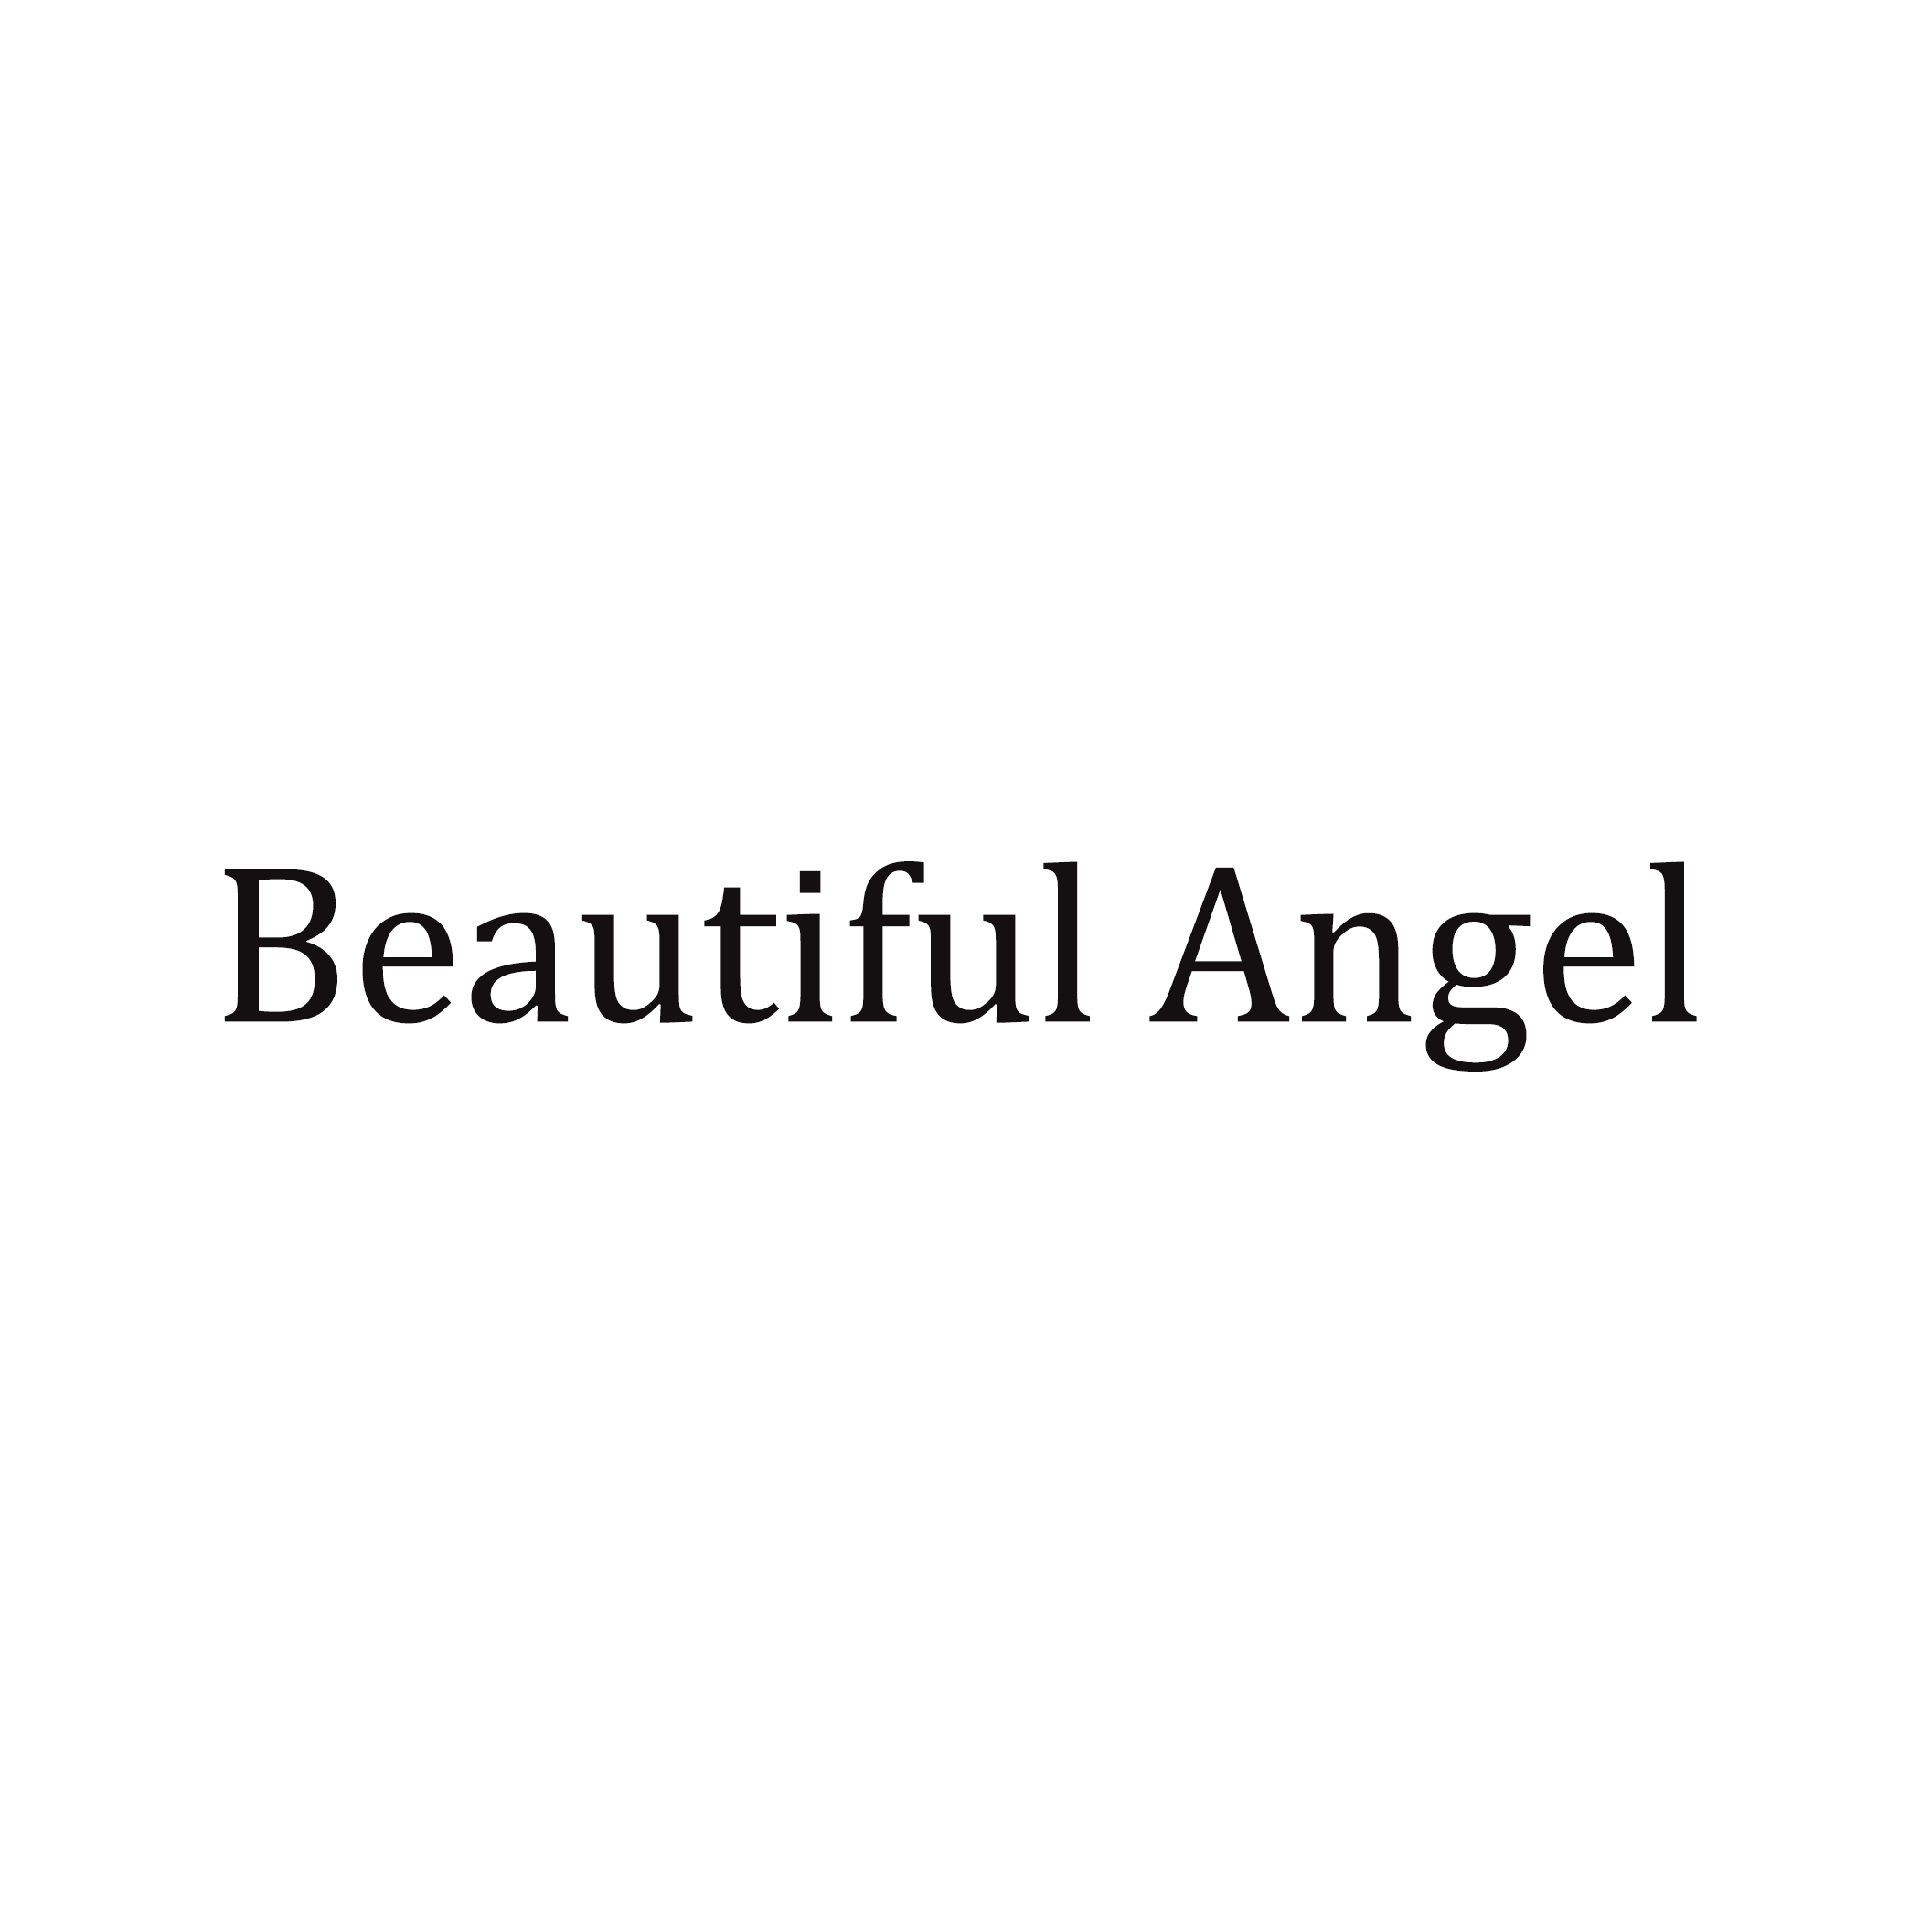 Product Brand: Beautiful Angel